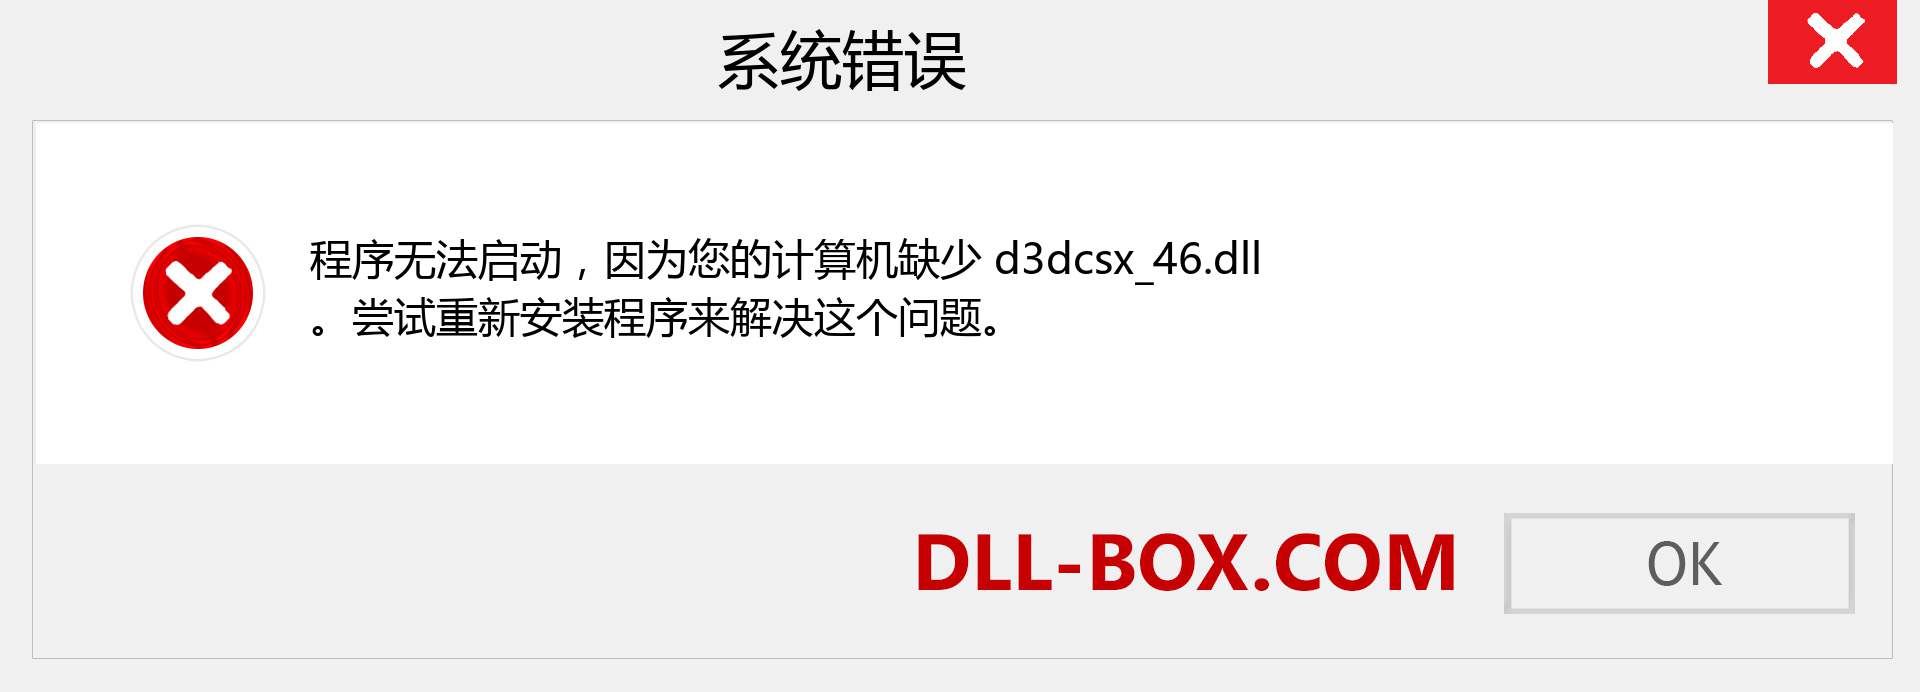 d3dcsx_46.dll 文件丢失？。 适用于 Windows 7、8、10 的下载 - 修复 Windows、照片、图像上的 d3dcsx_46 dll 丢失错误